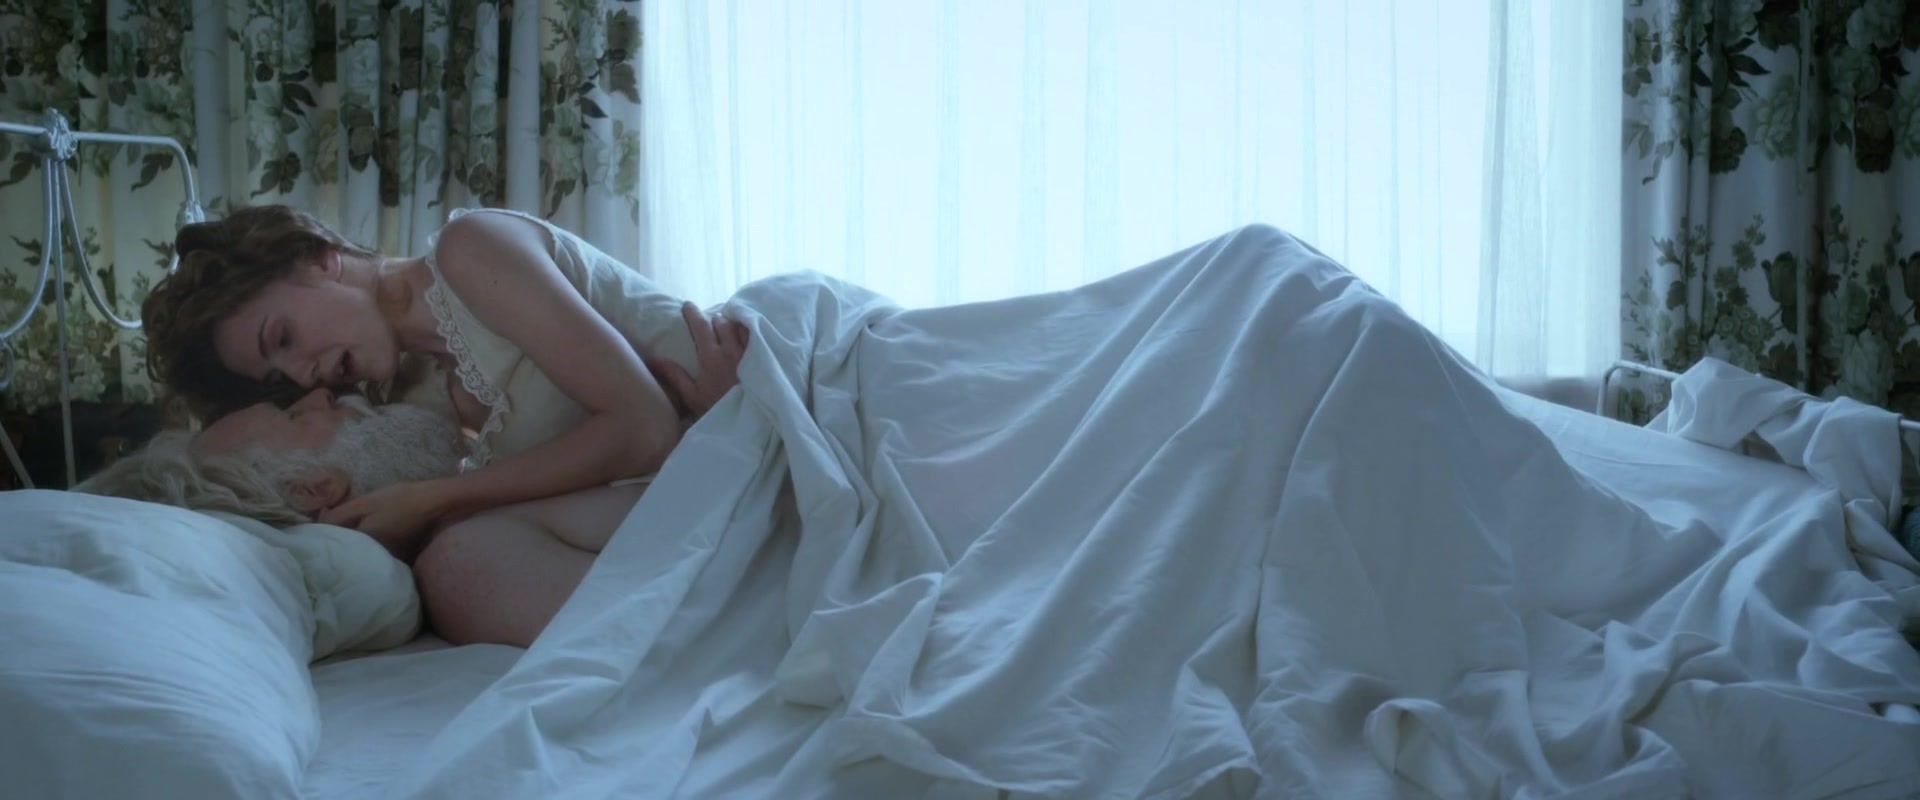 Voyeur Full Frontal scenes Meisha Lowe, Sara Canning, Jodi Balfour nude - Eadweard (2015) Nena